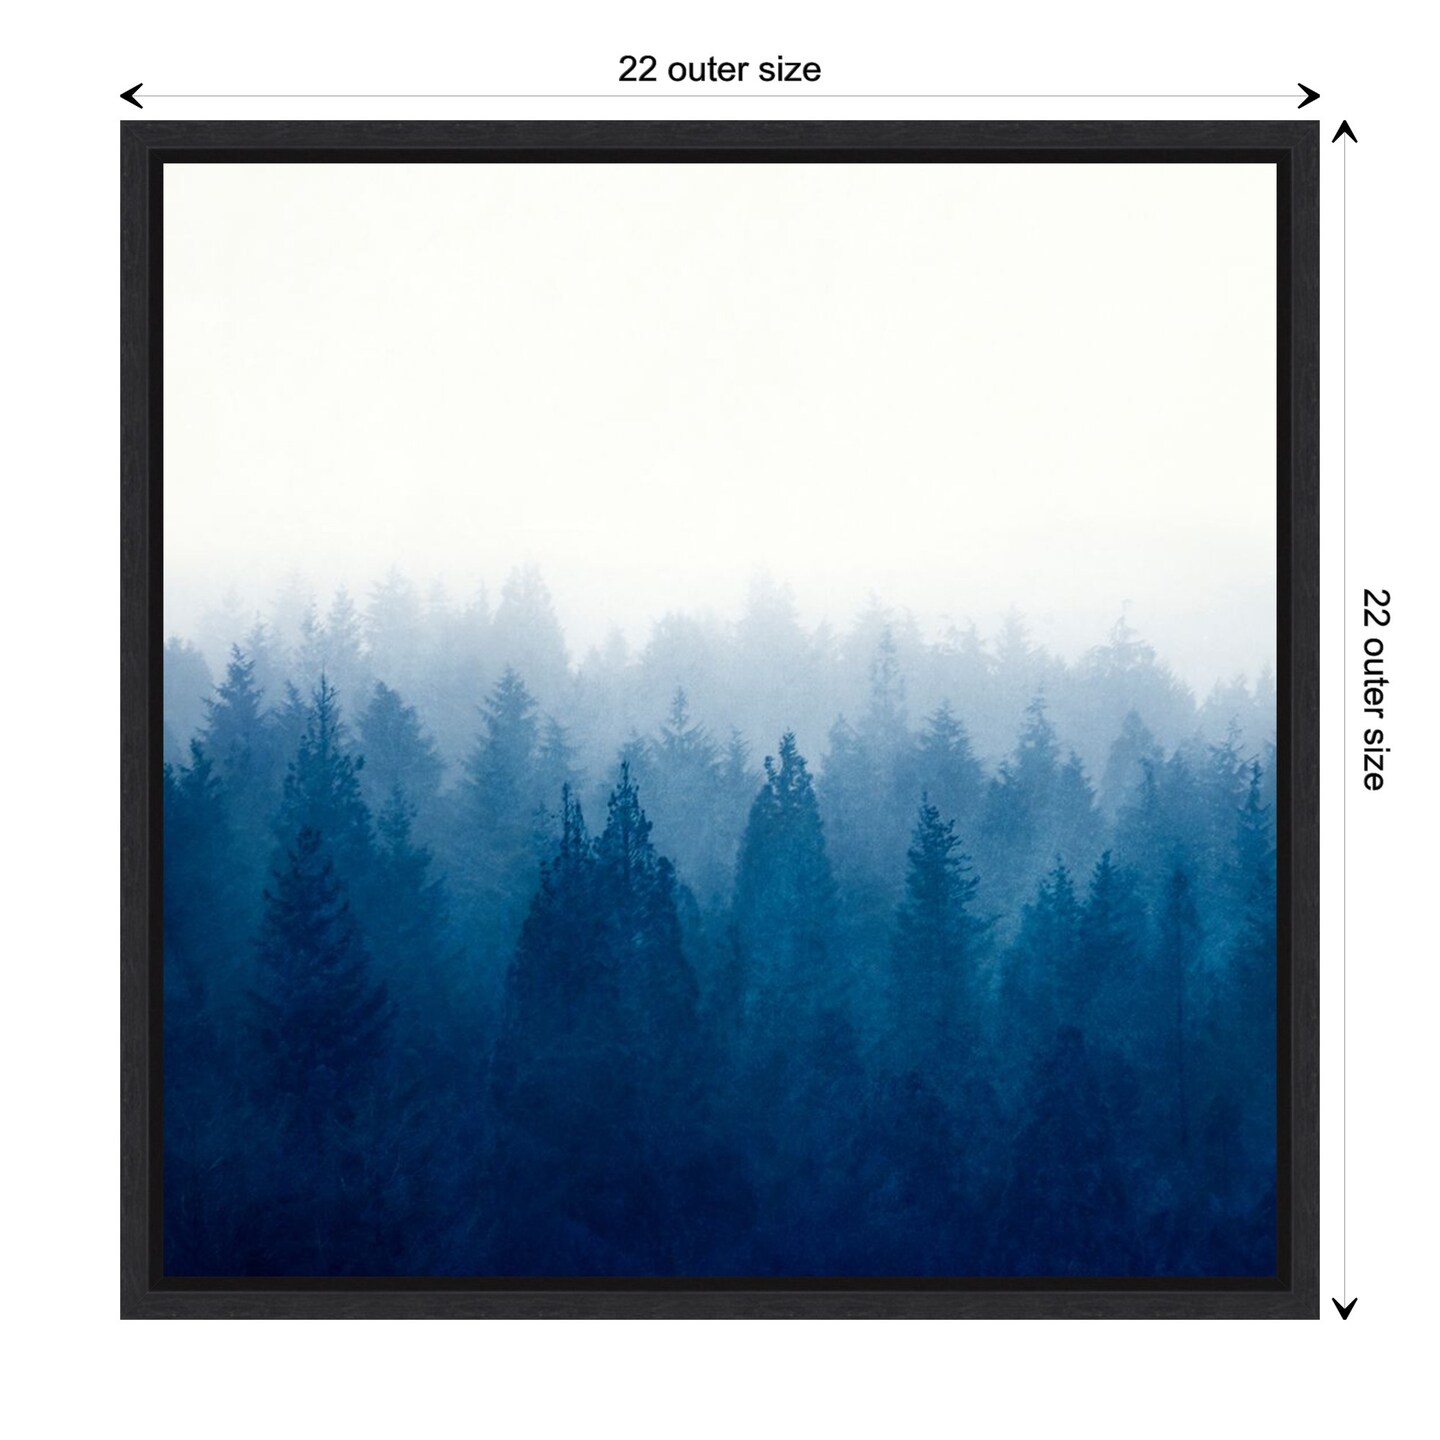 Heart and Soul - Foggy Forest by Dirk Wustenhagen Framed Canvas Wall Art